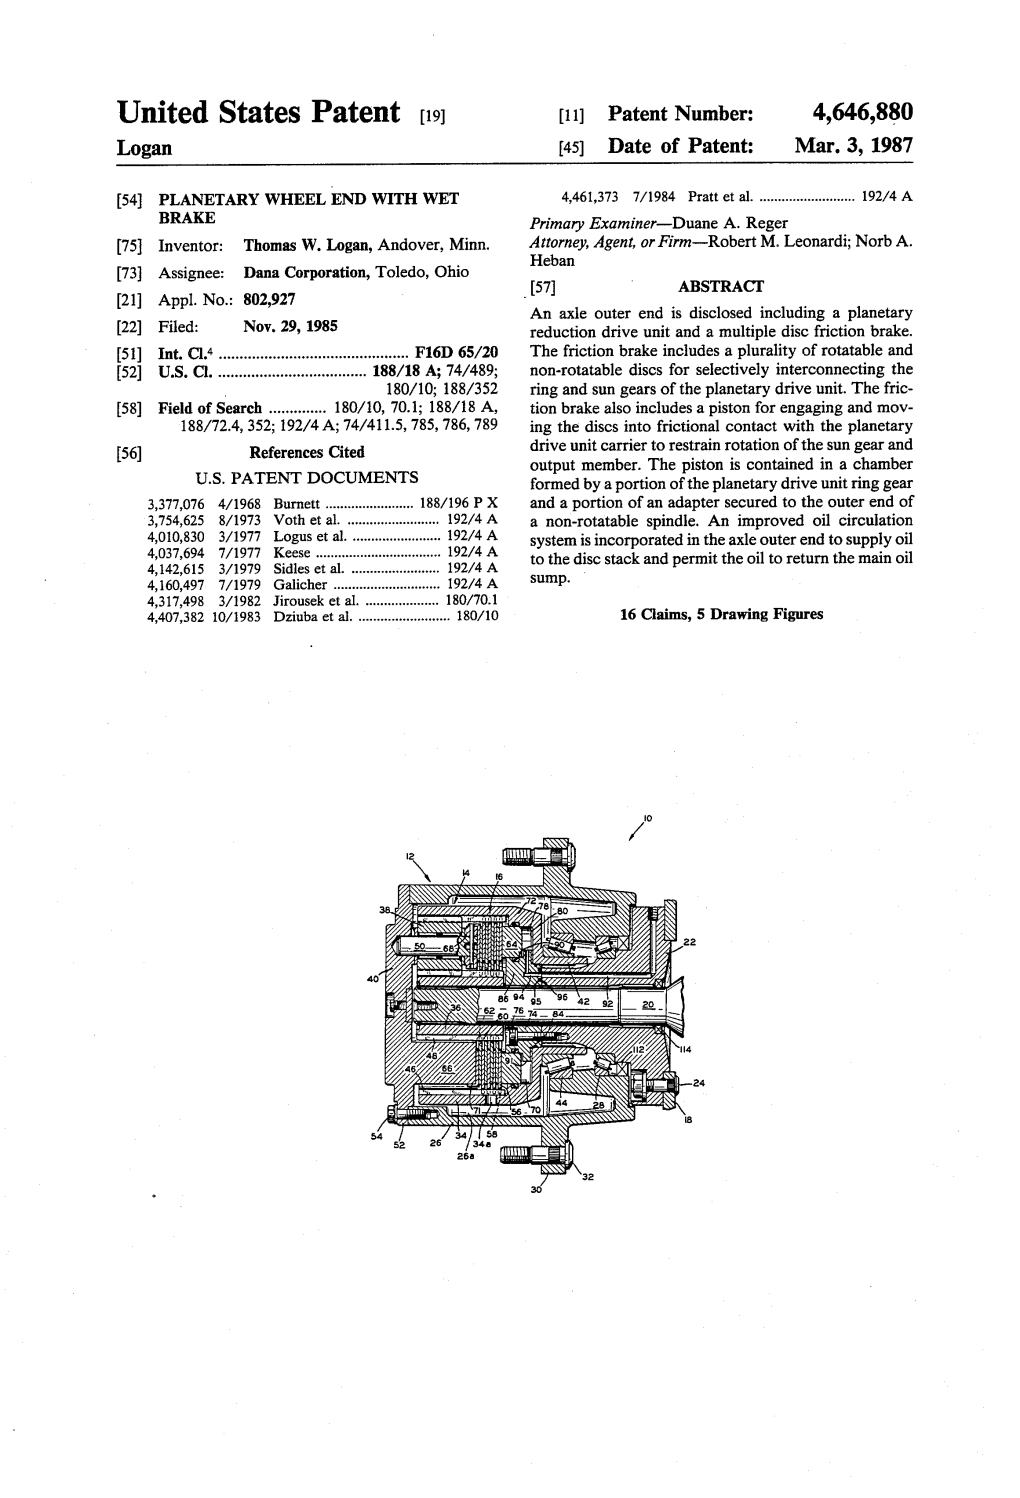 United States Patent (19) 11 Patent Number: 4,646,880 Logan (45) Date of Patent: Mar